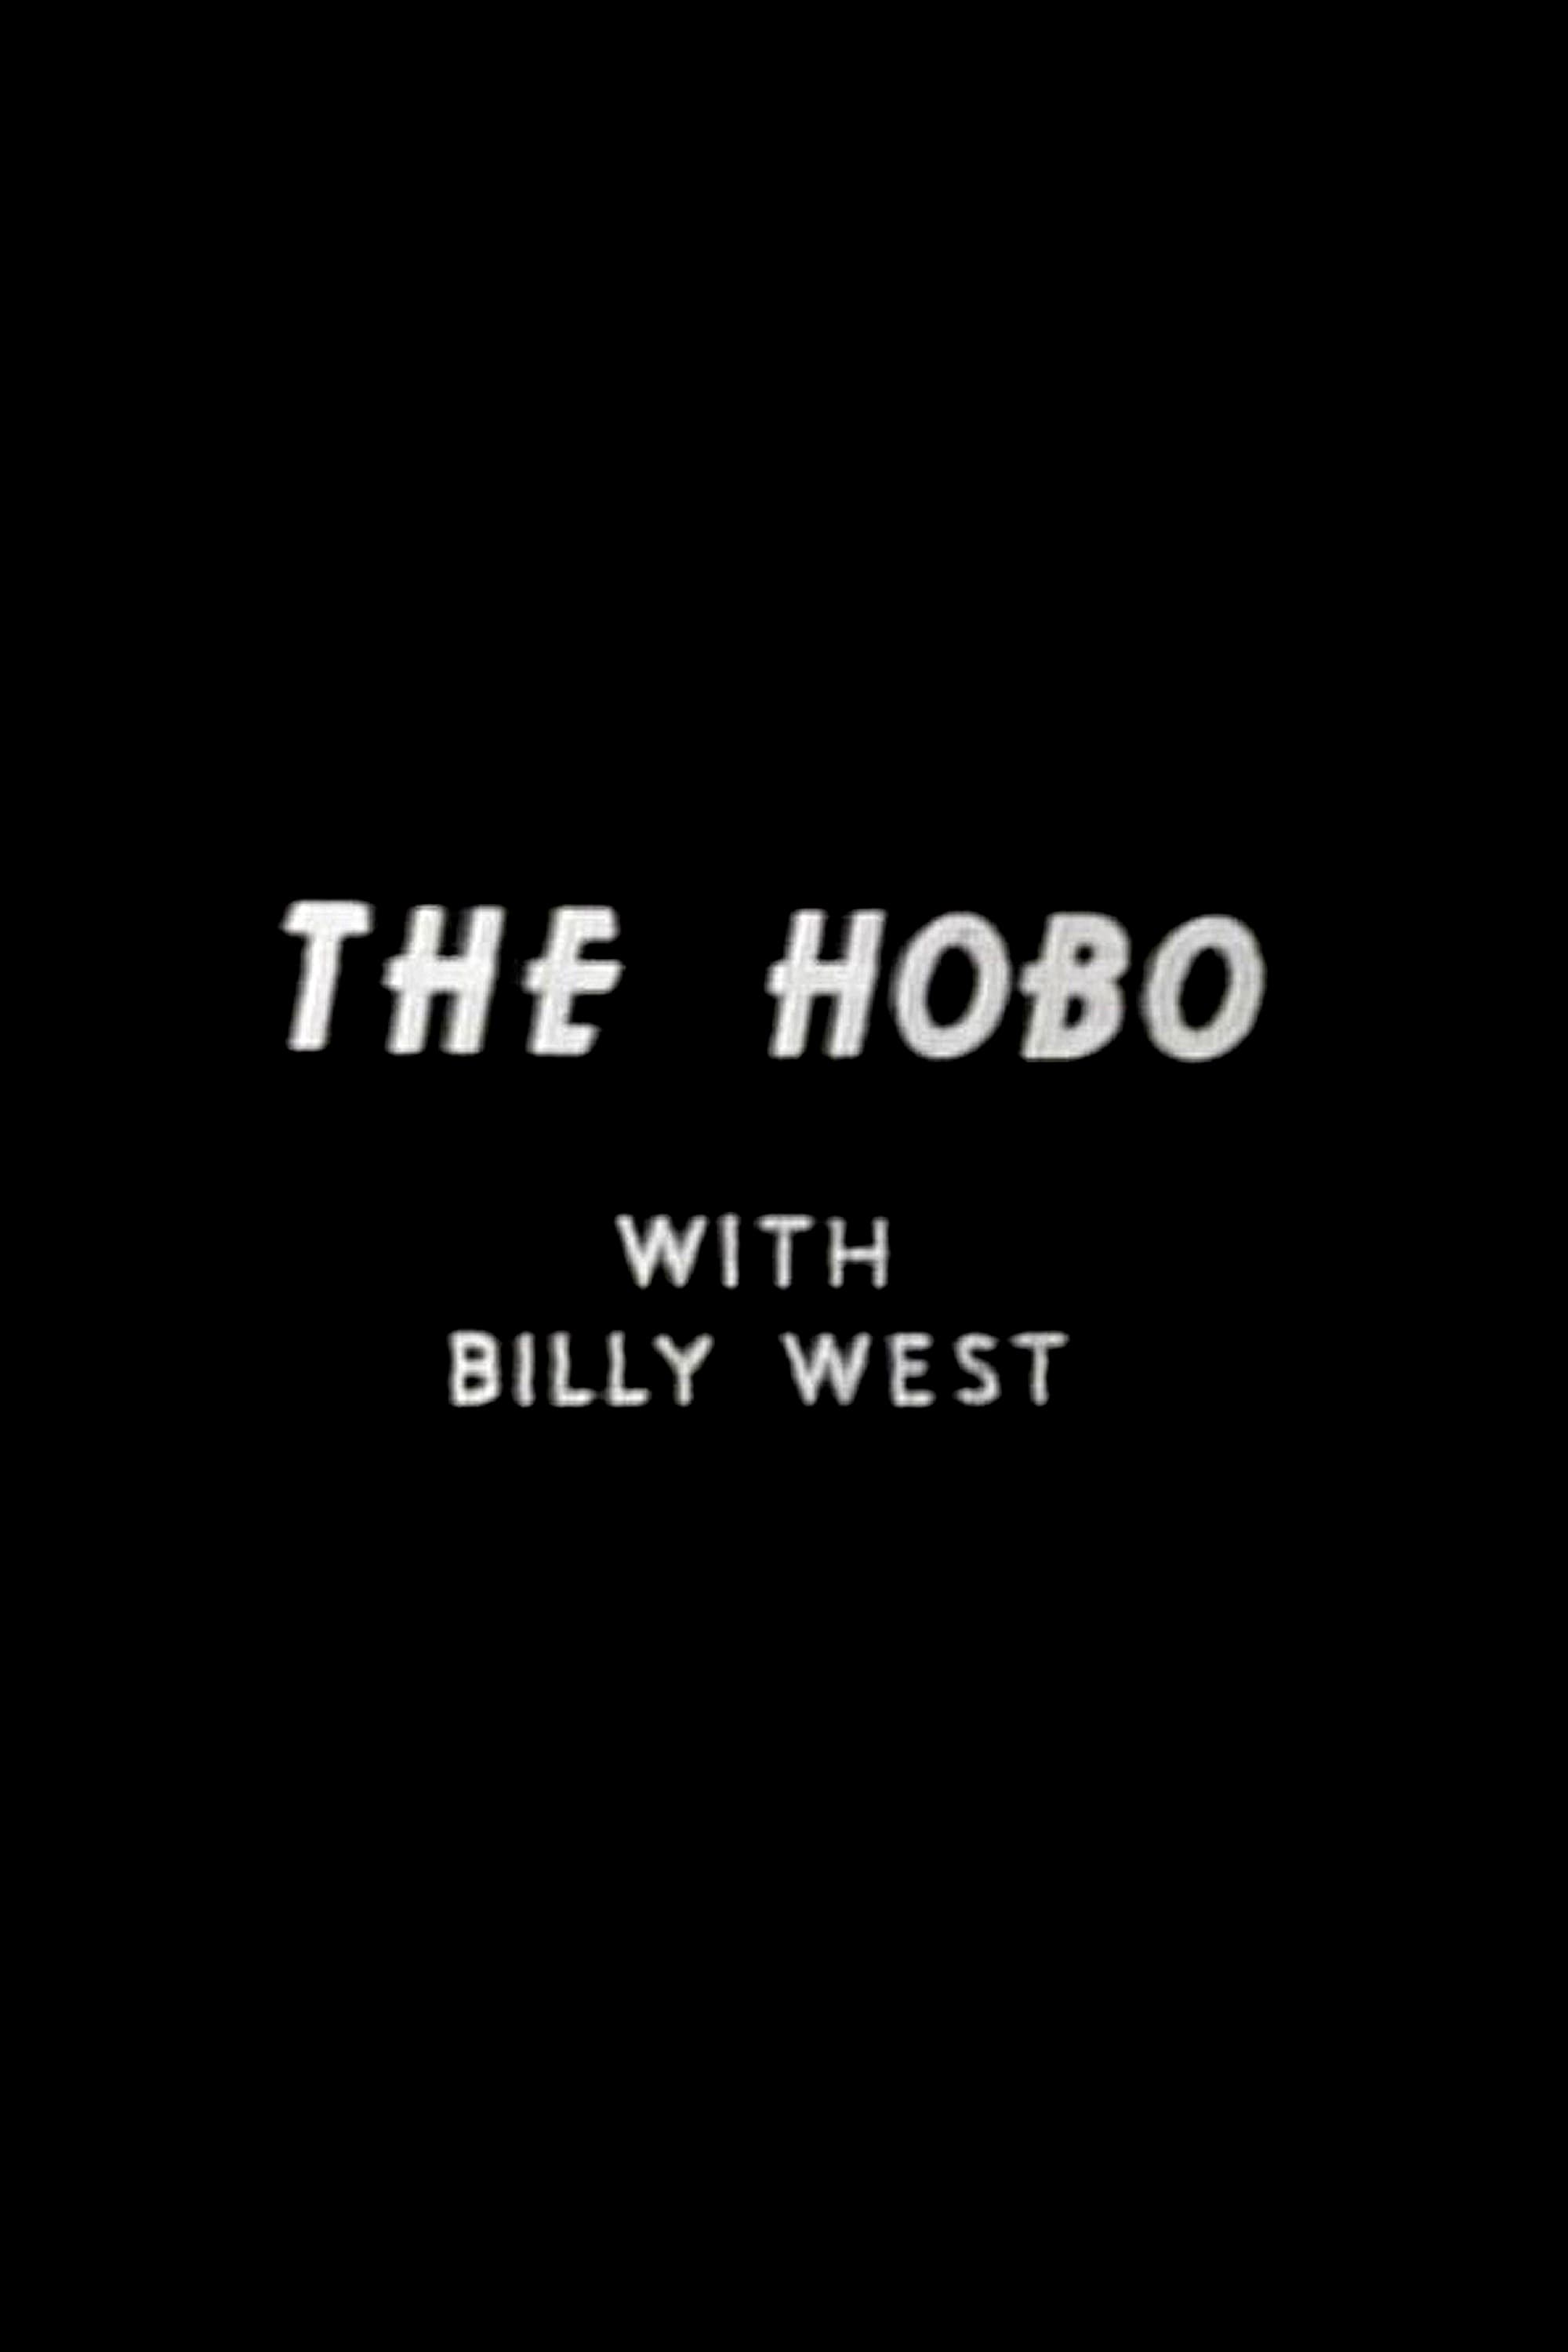 Plakat von "The Hobo"